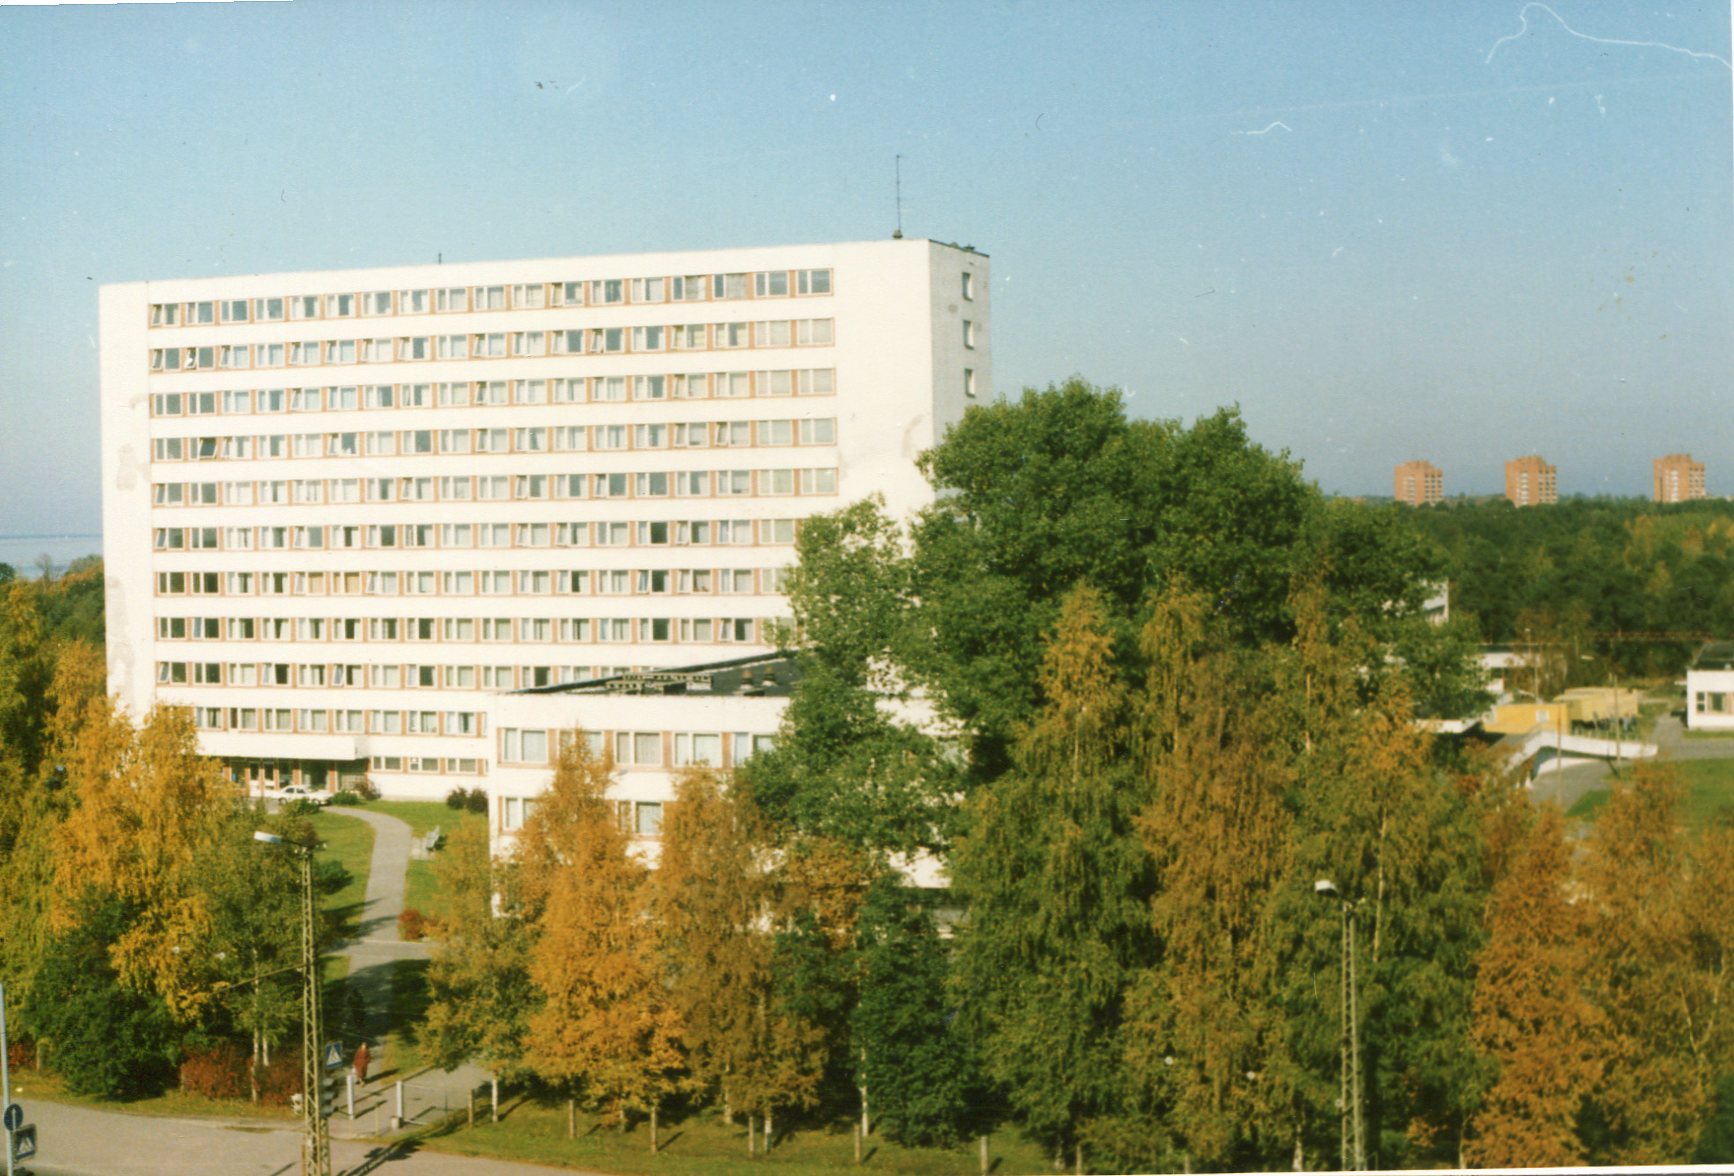 External view of the Estonian Marines’ Hospital